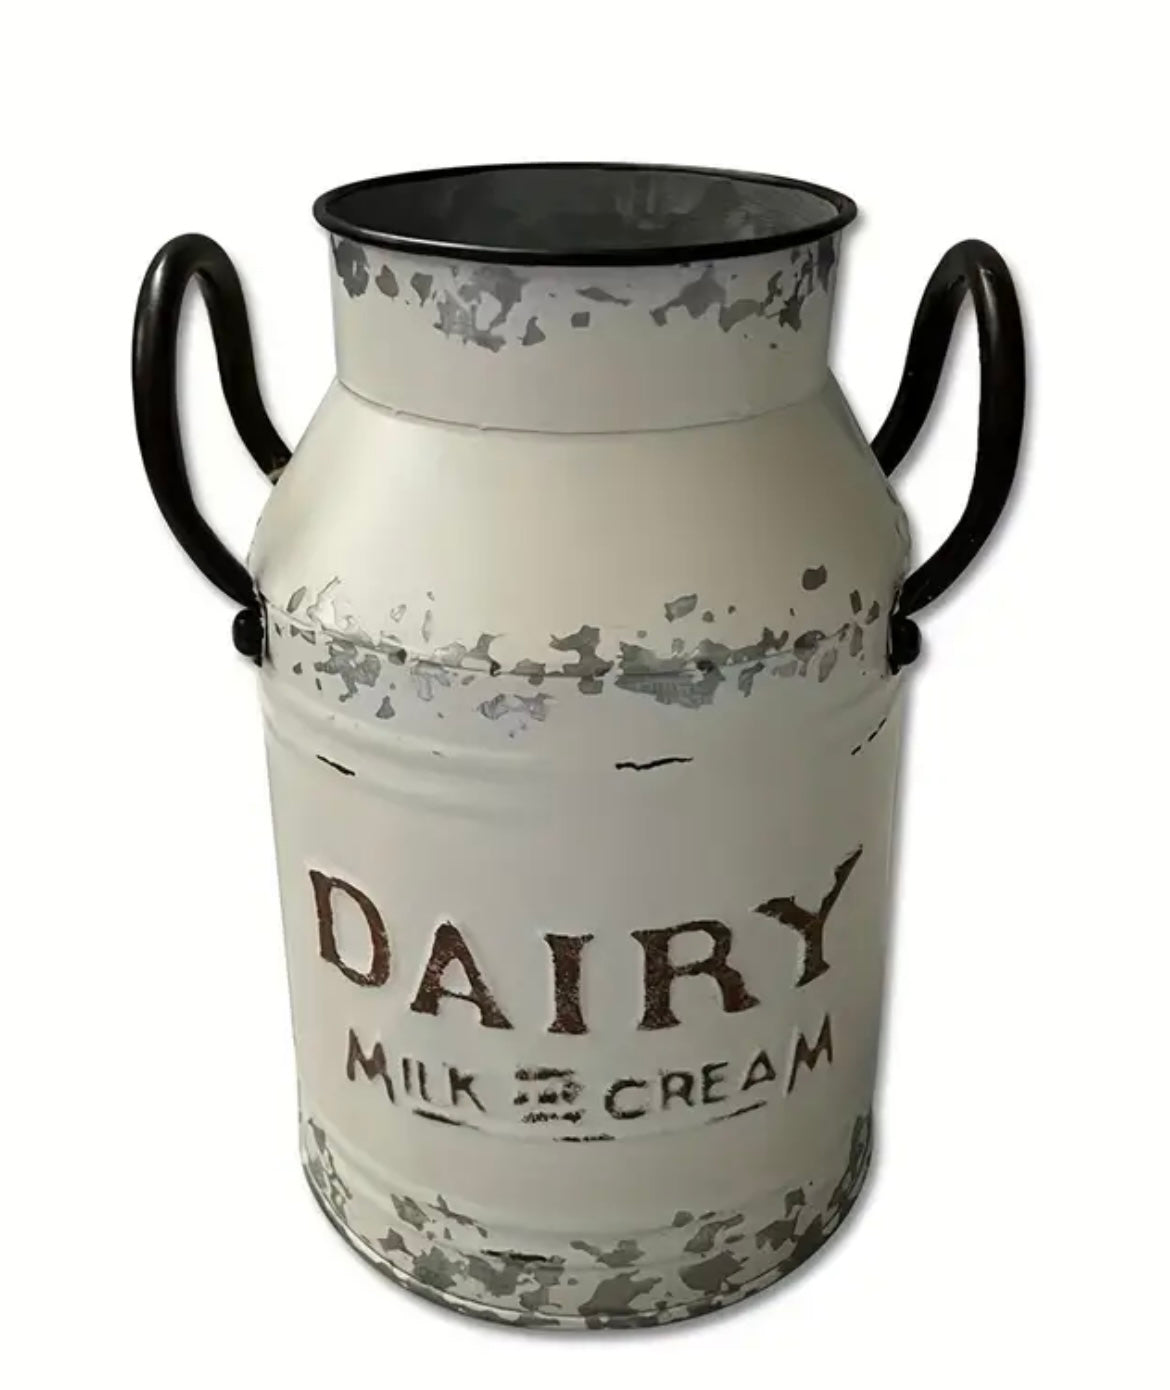 Vintage Dairy Pot